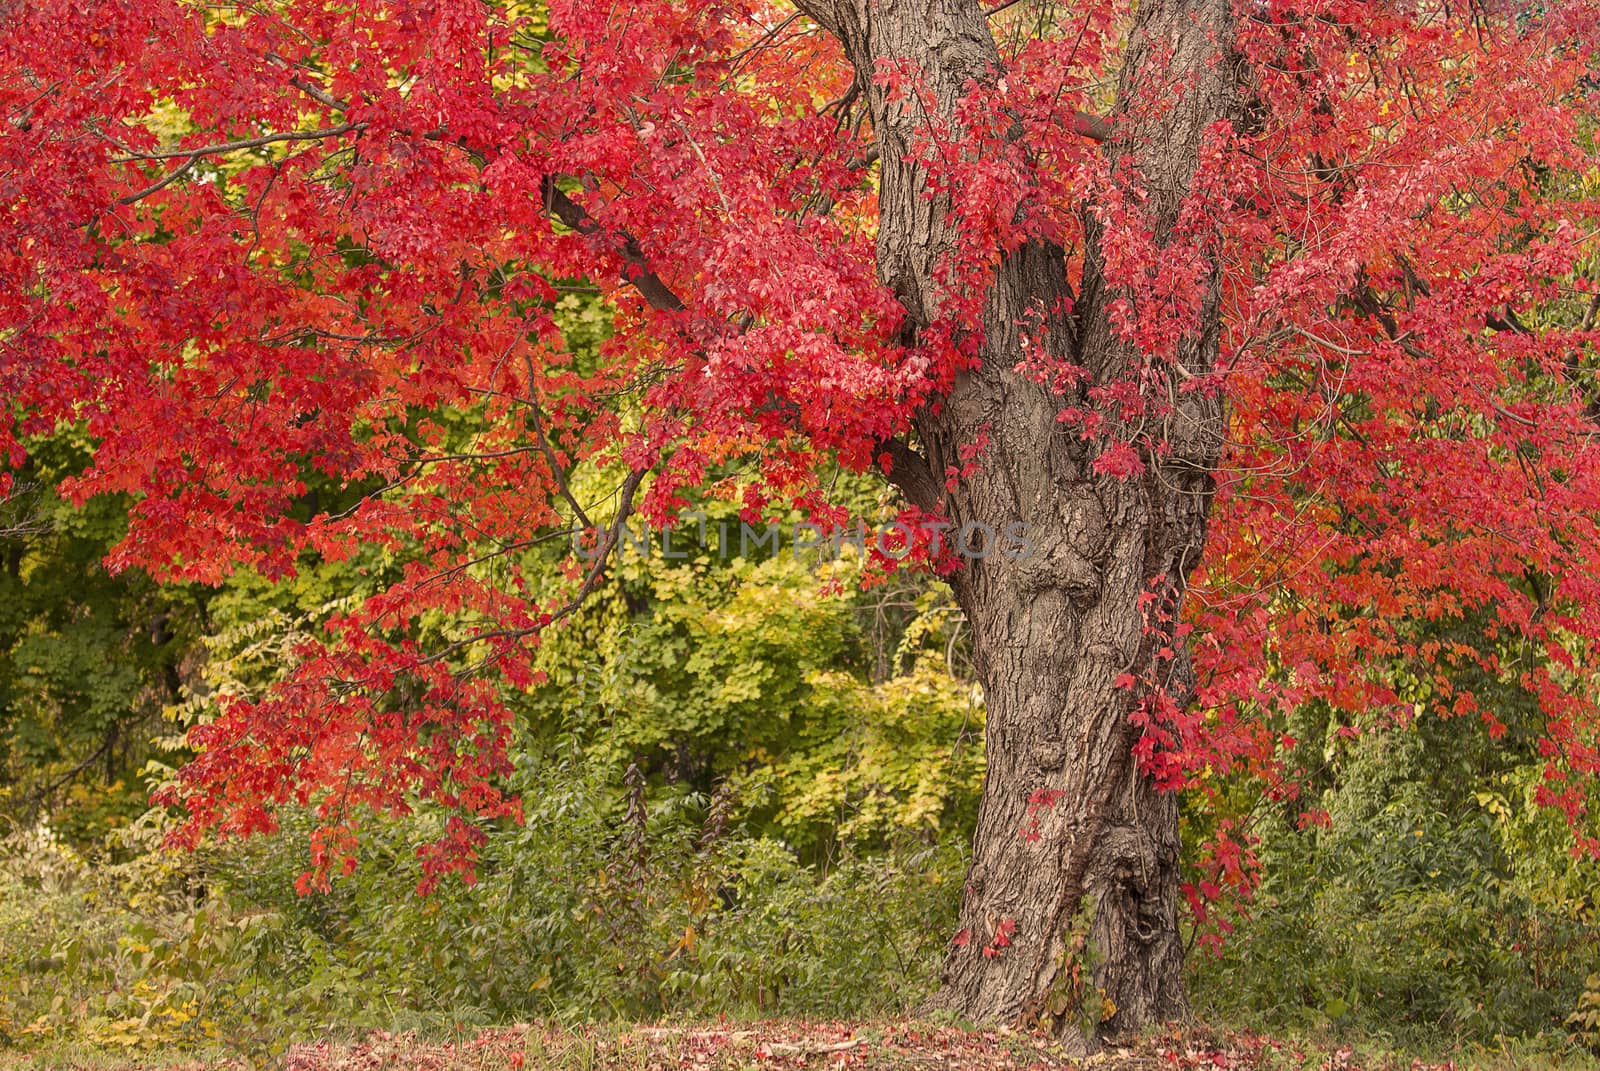 Autumn foliage at peack in north america